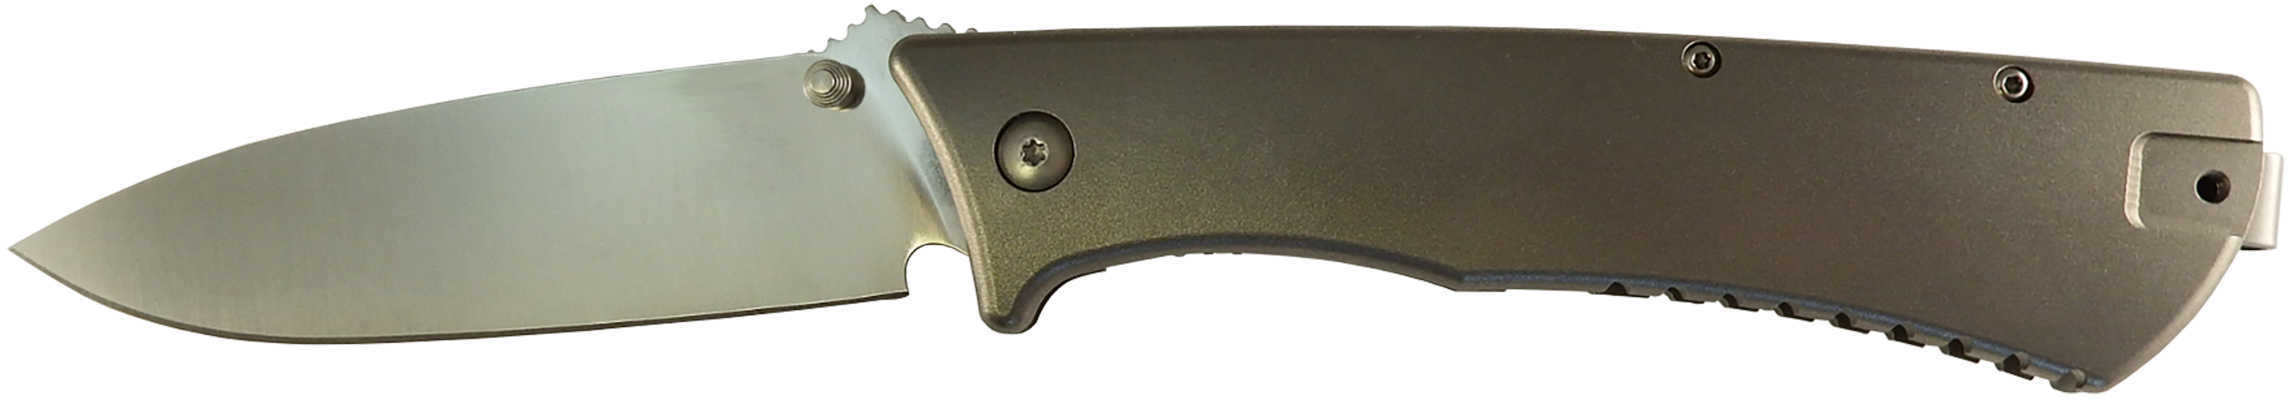 Ontario Knife Company Cerberus Folder Md: 1776